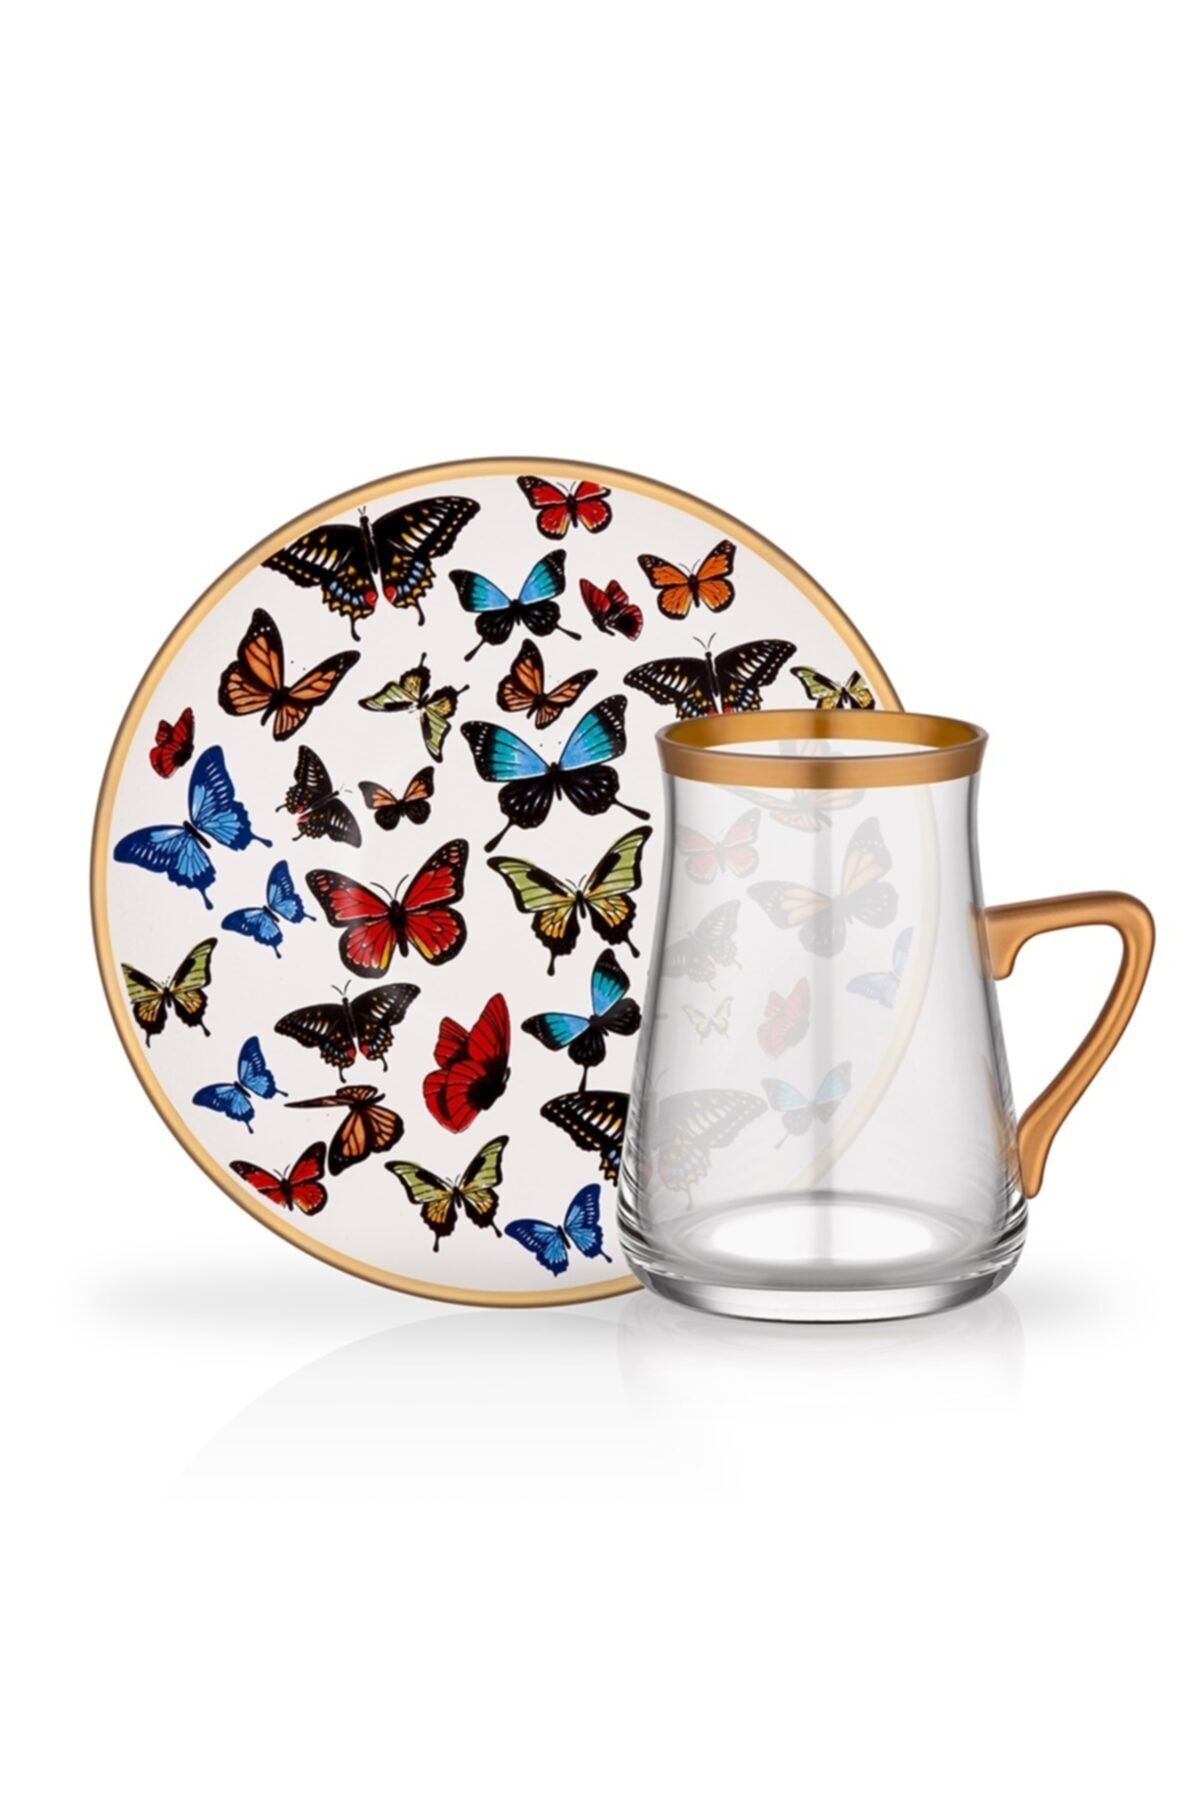 Glore Tarabya Kulplu Çay Seti 6'lı Butterfly